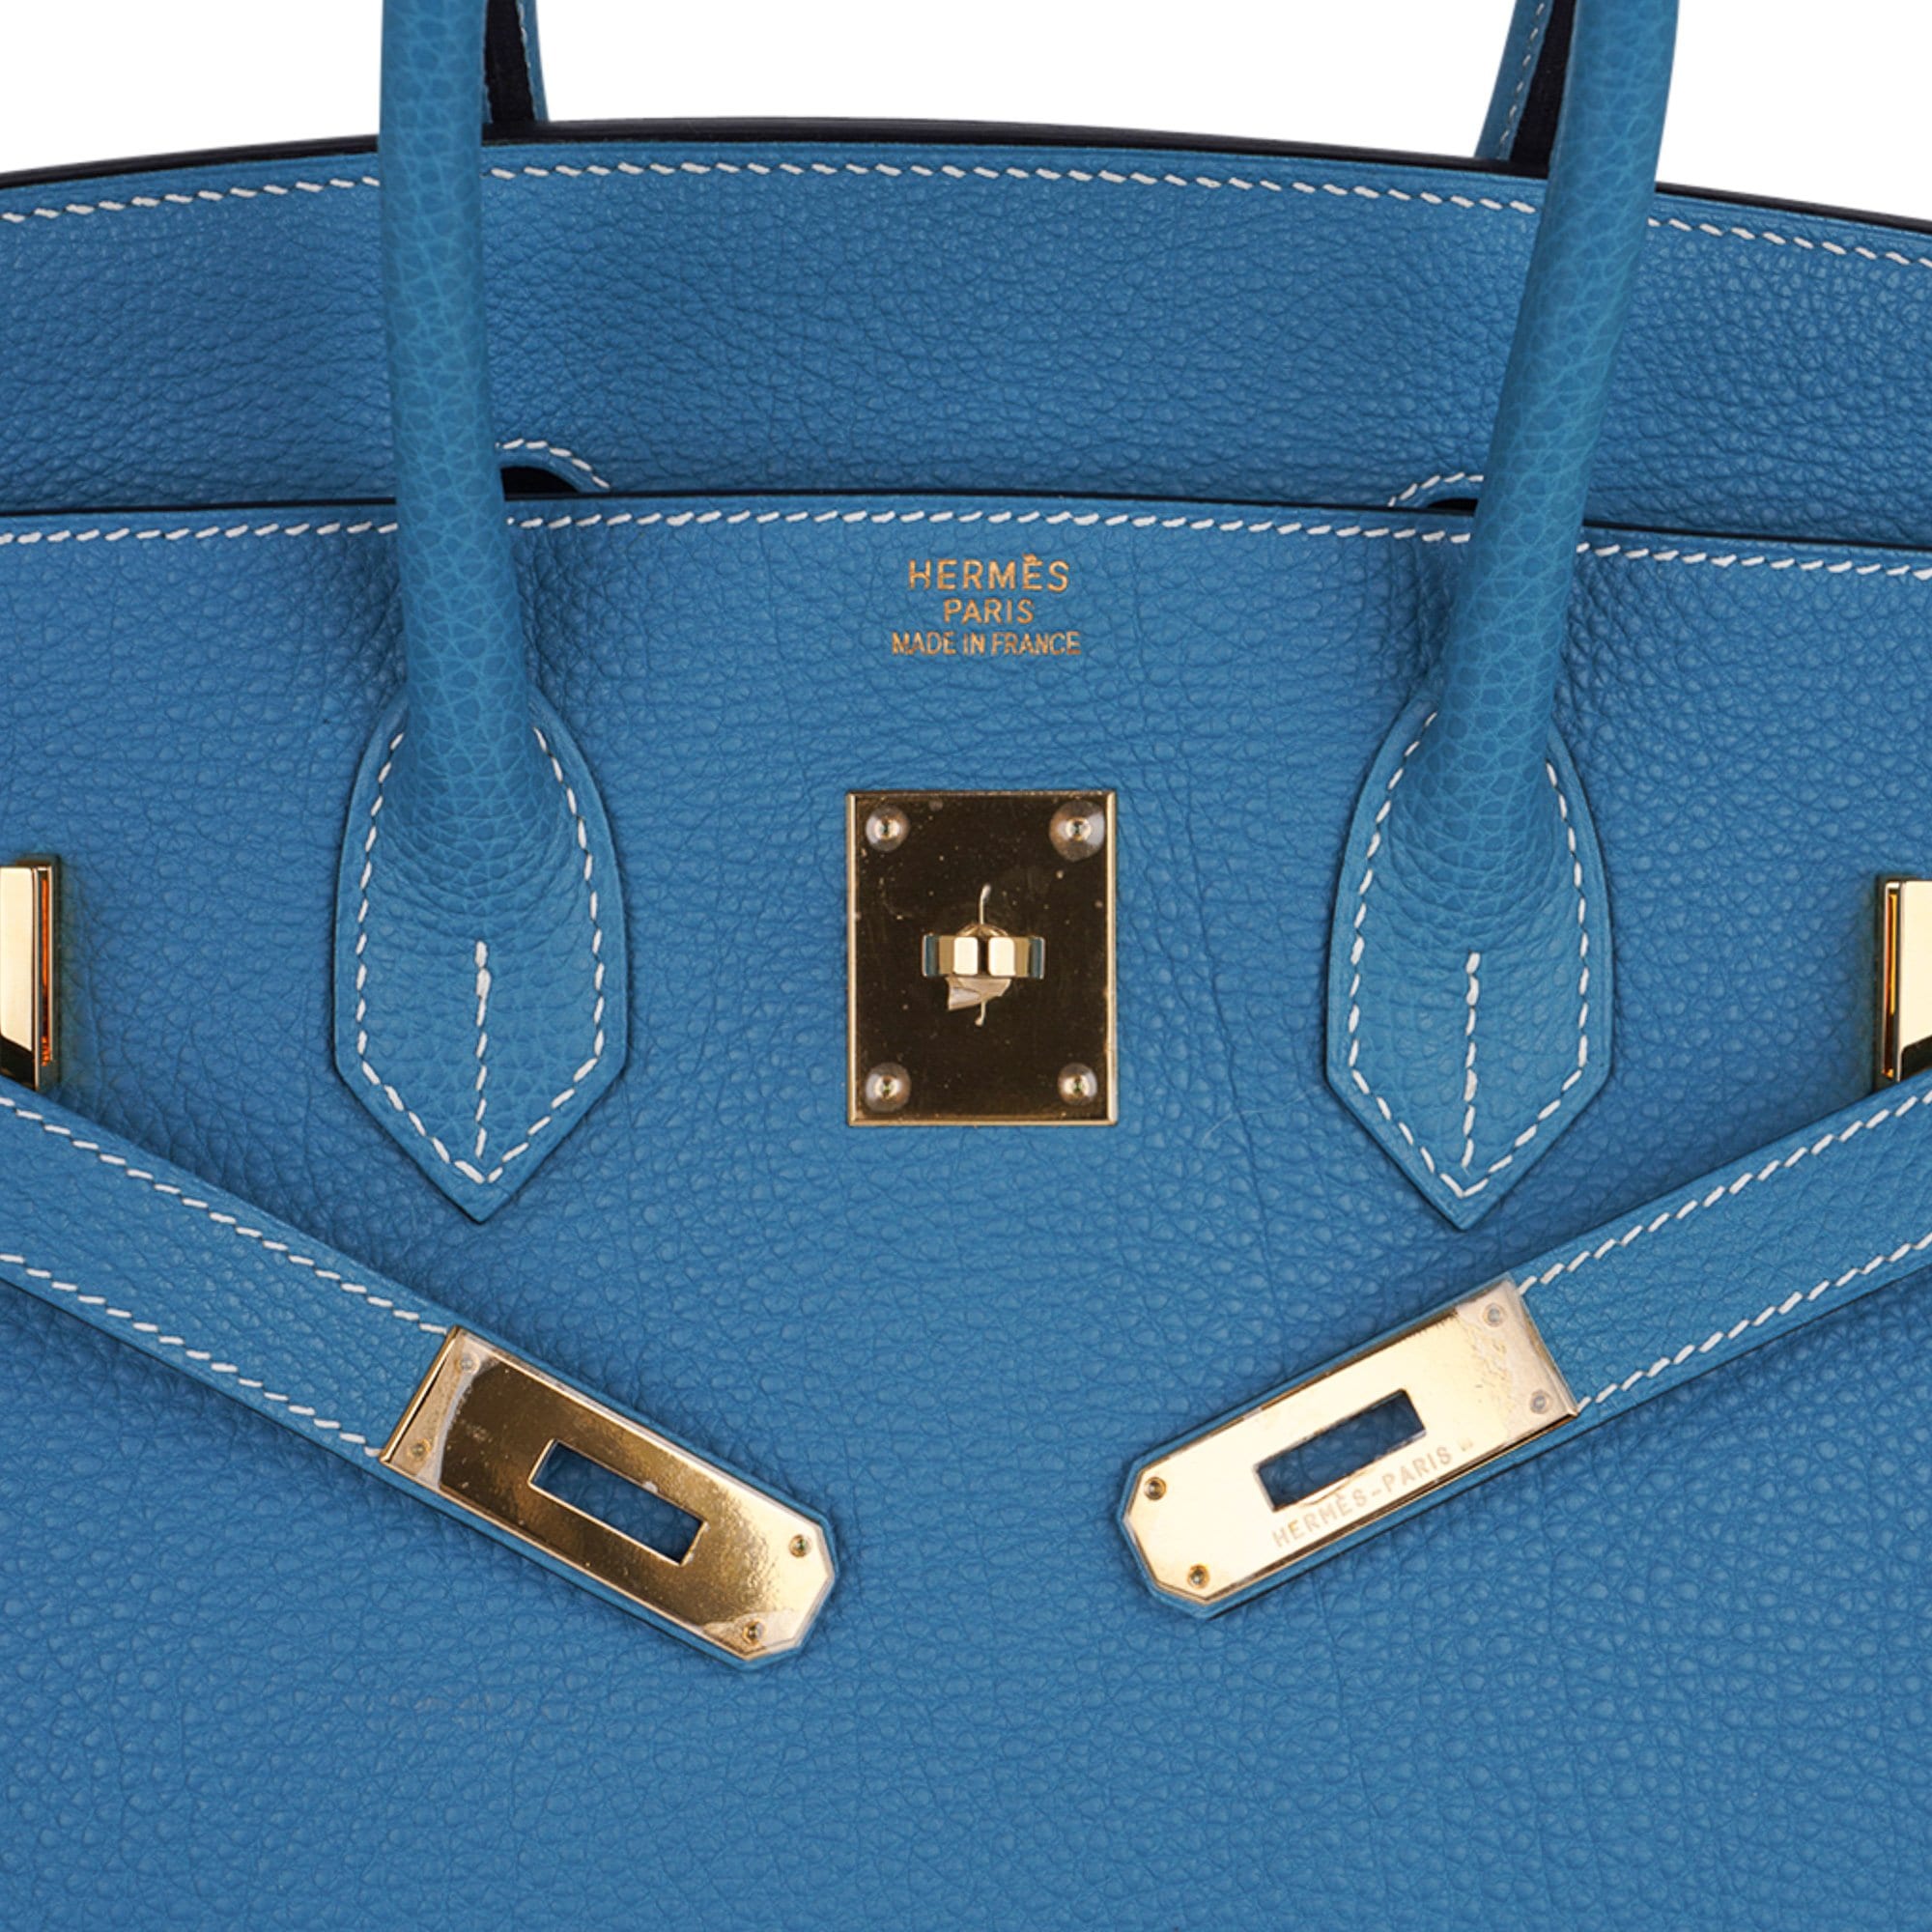 Hermès Blue Jean Togo Leather Birkin 35 31h427s